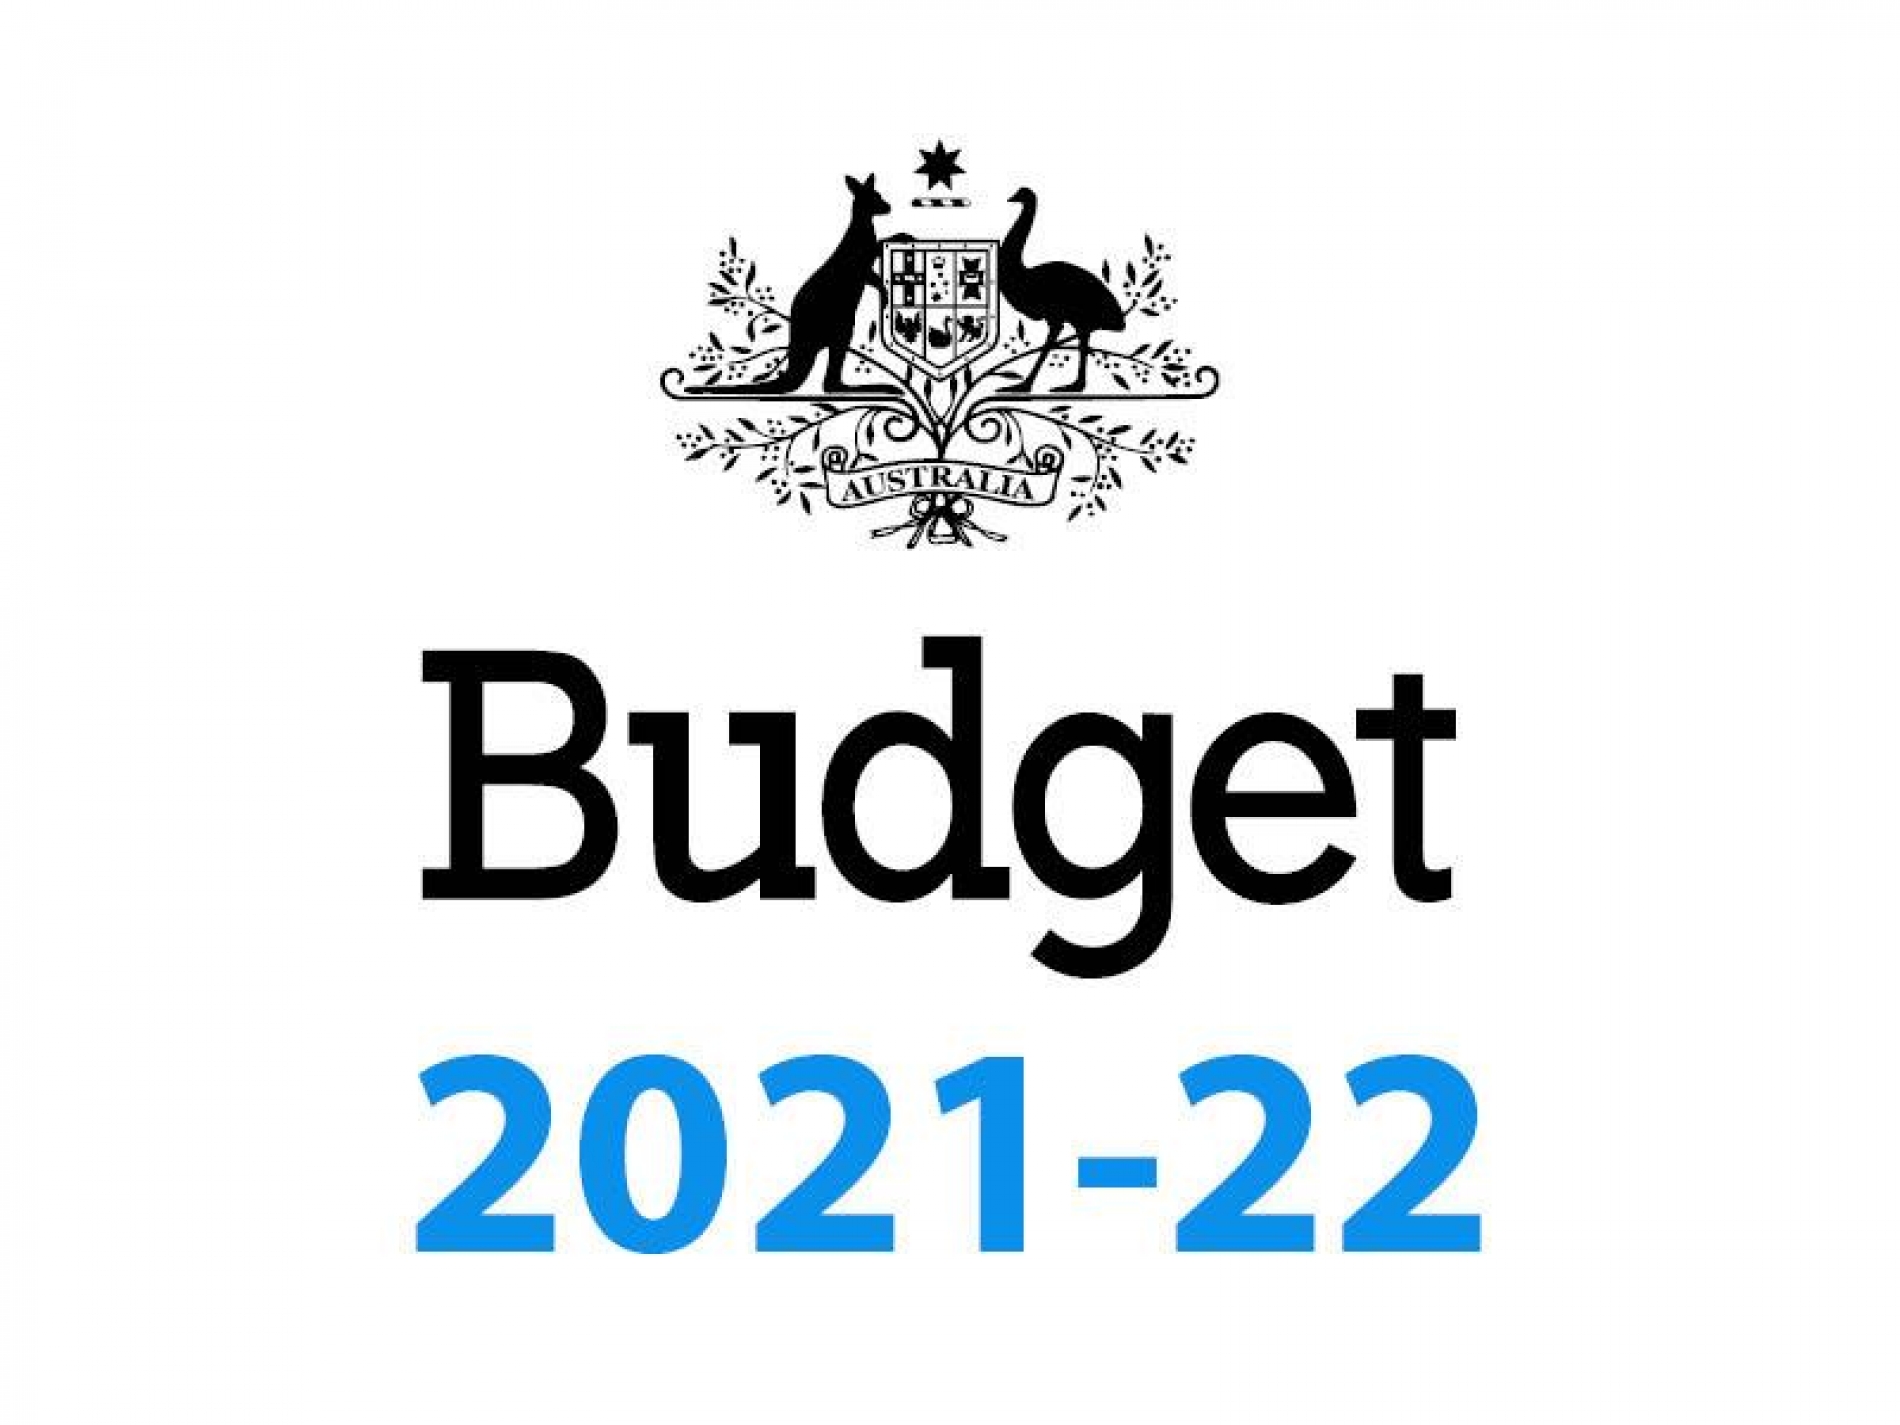 Federal Budget 2021-2022